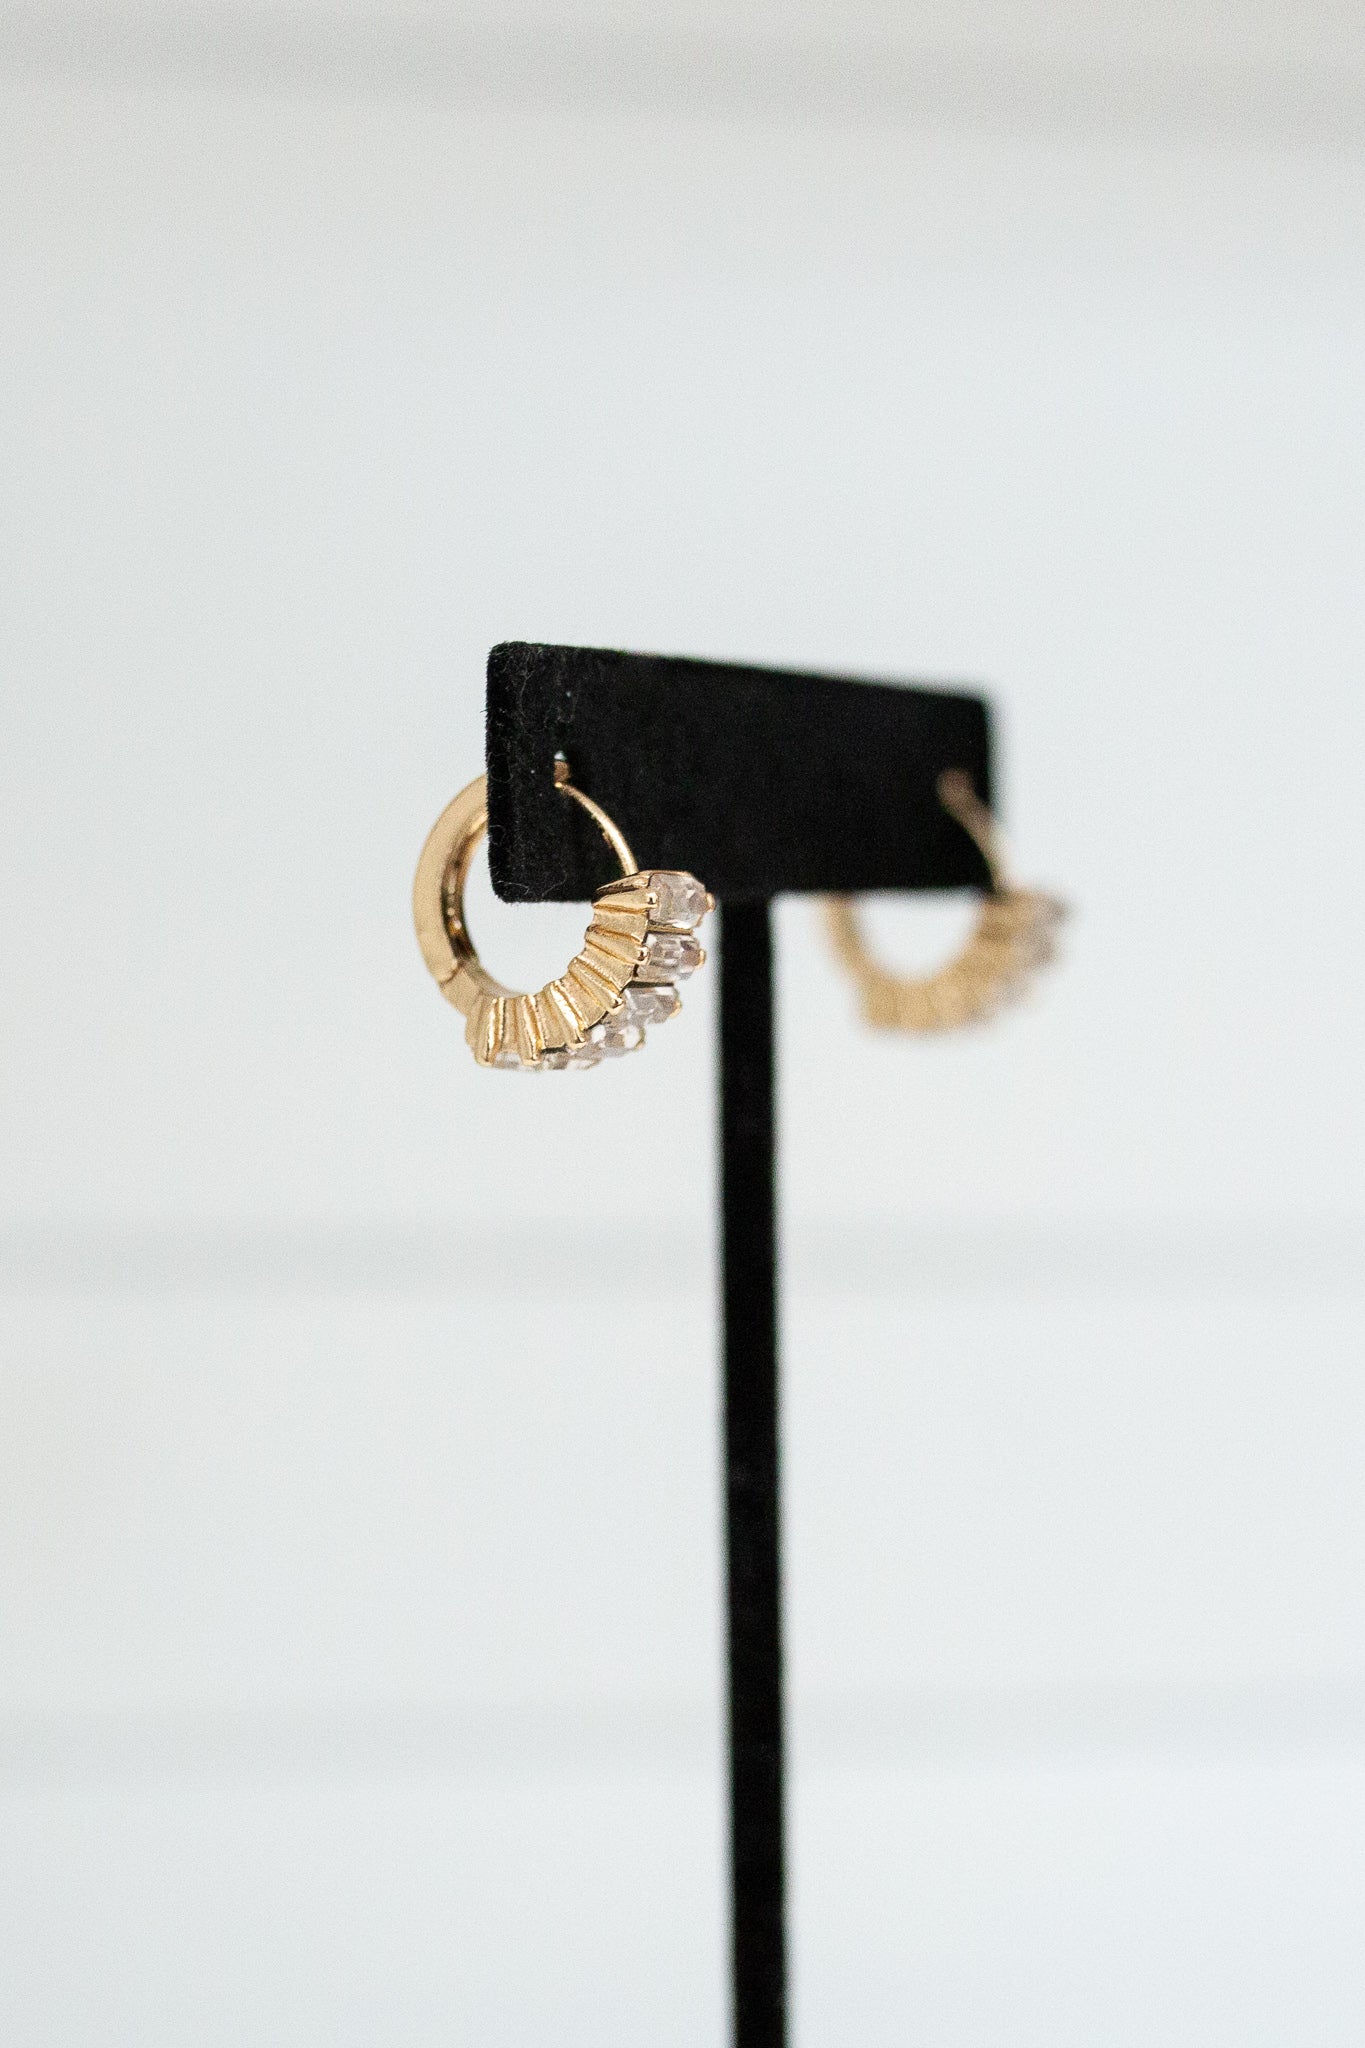 Diamond Huggie Earrings- Gold